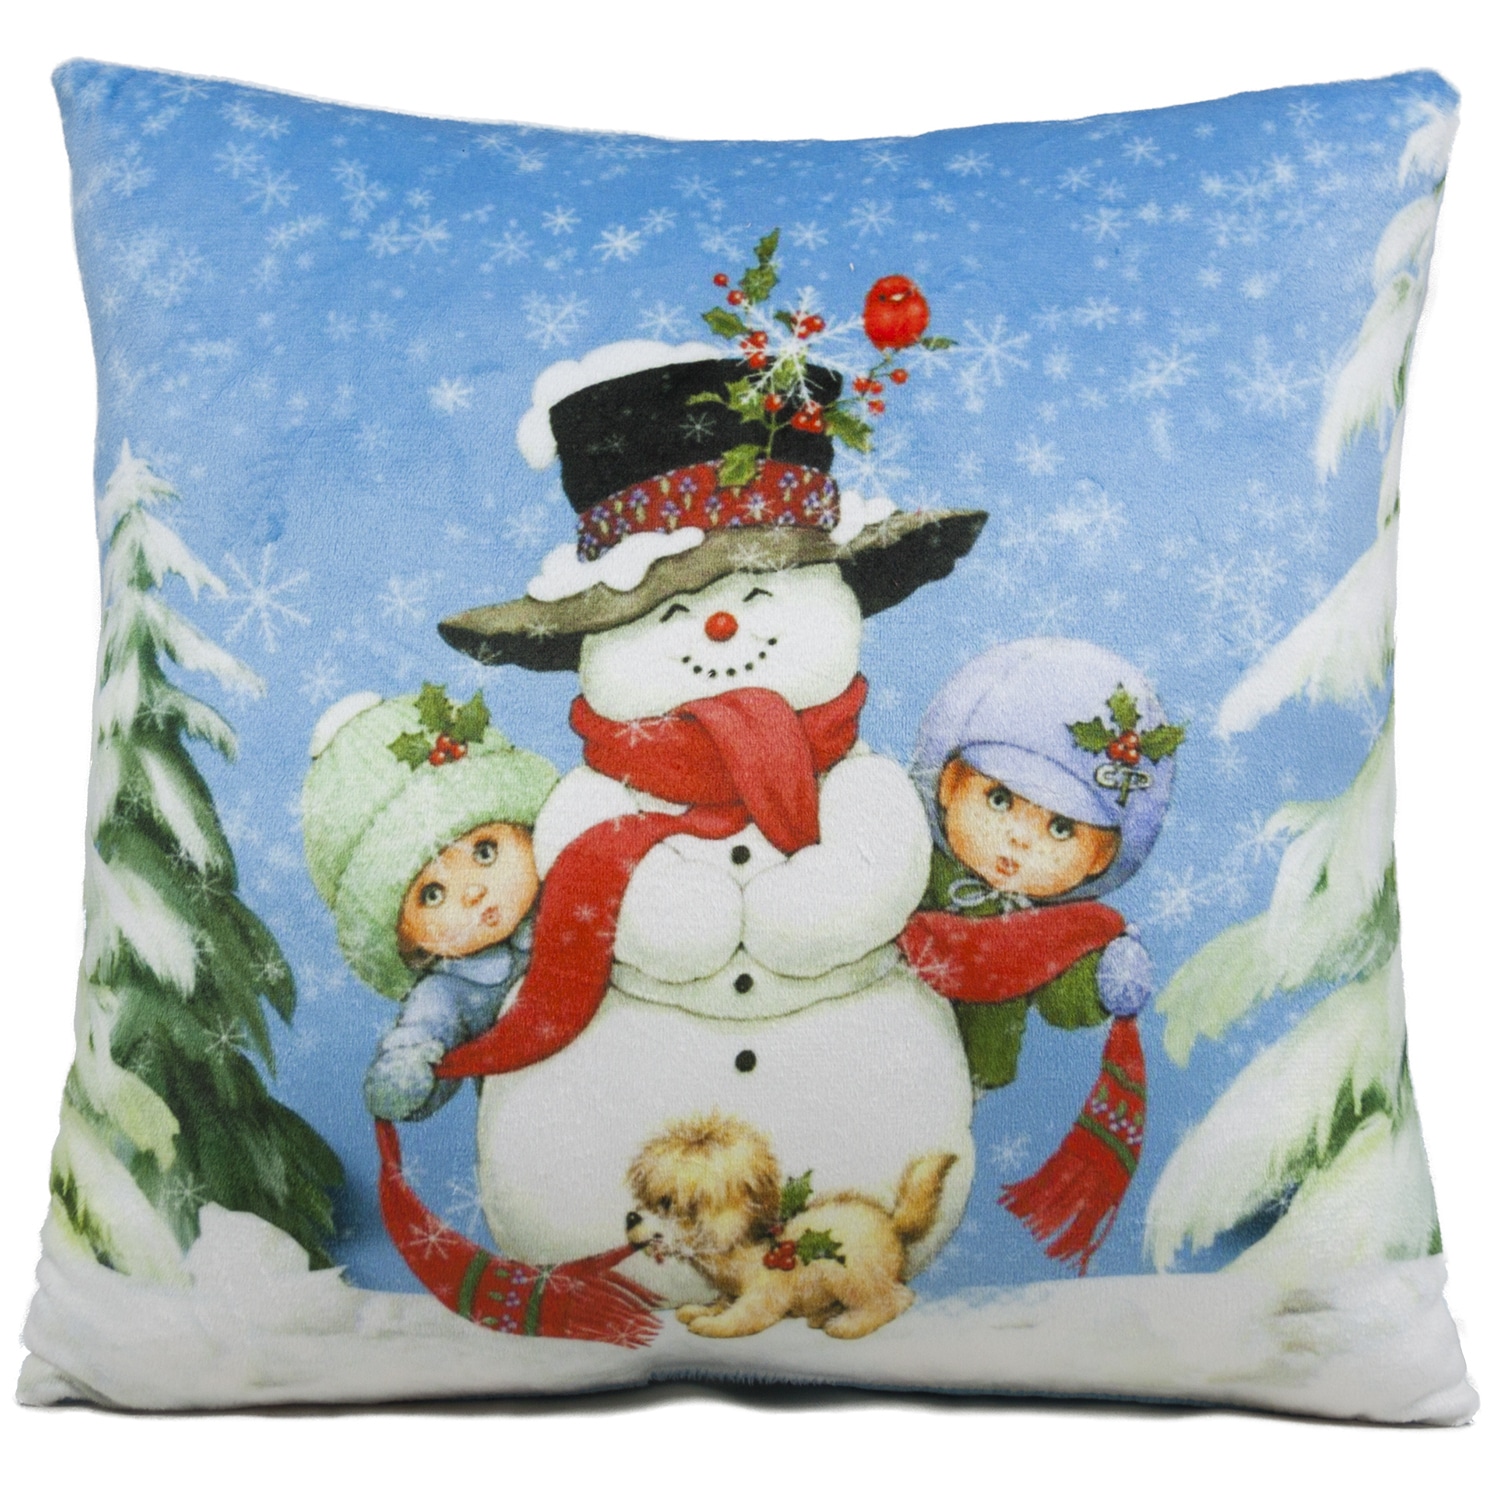 Christmas pillow - Snowman with children